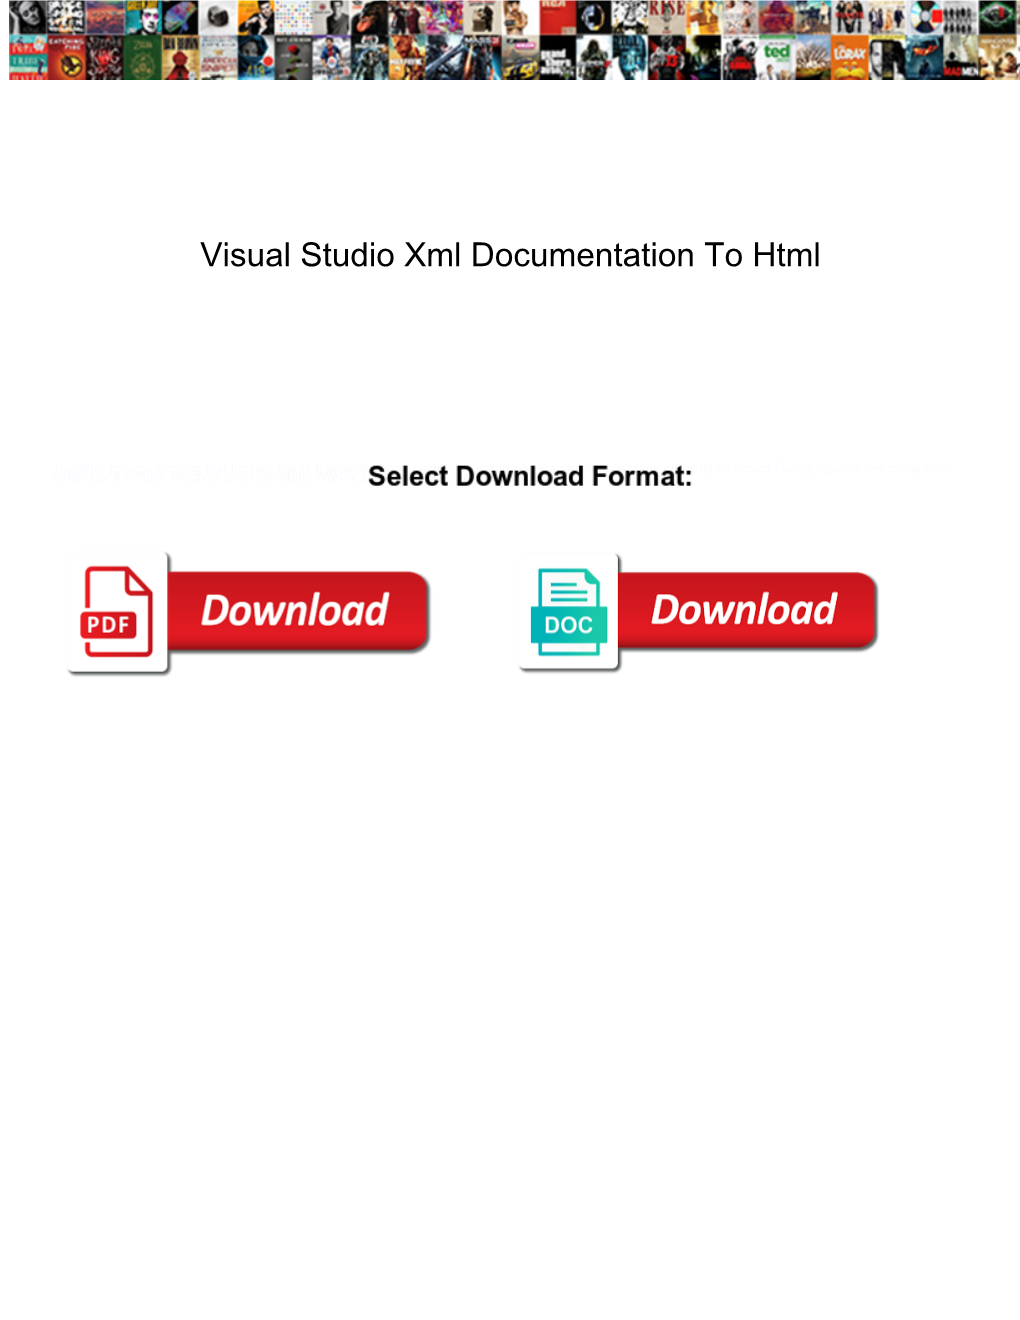 Visual Studio Xml Documentation to Html